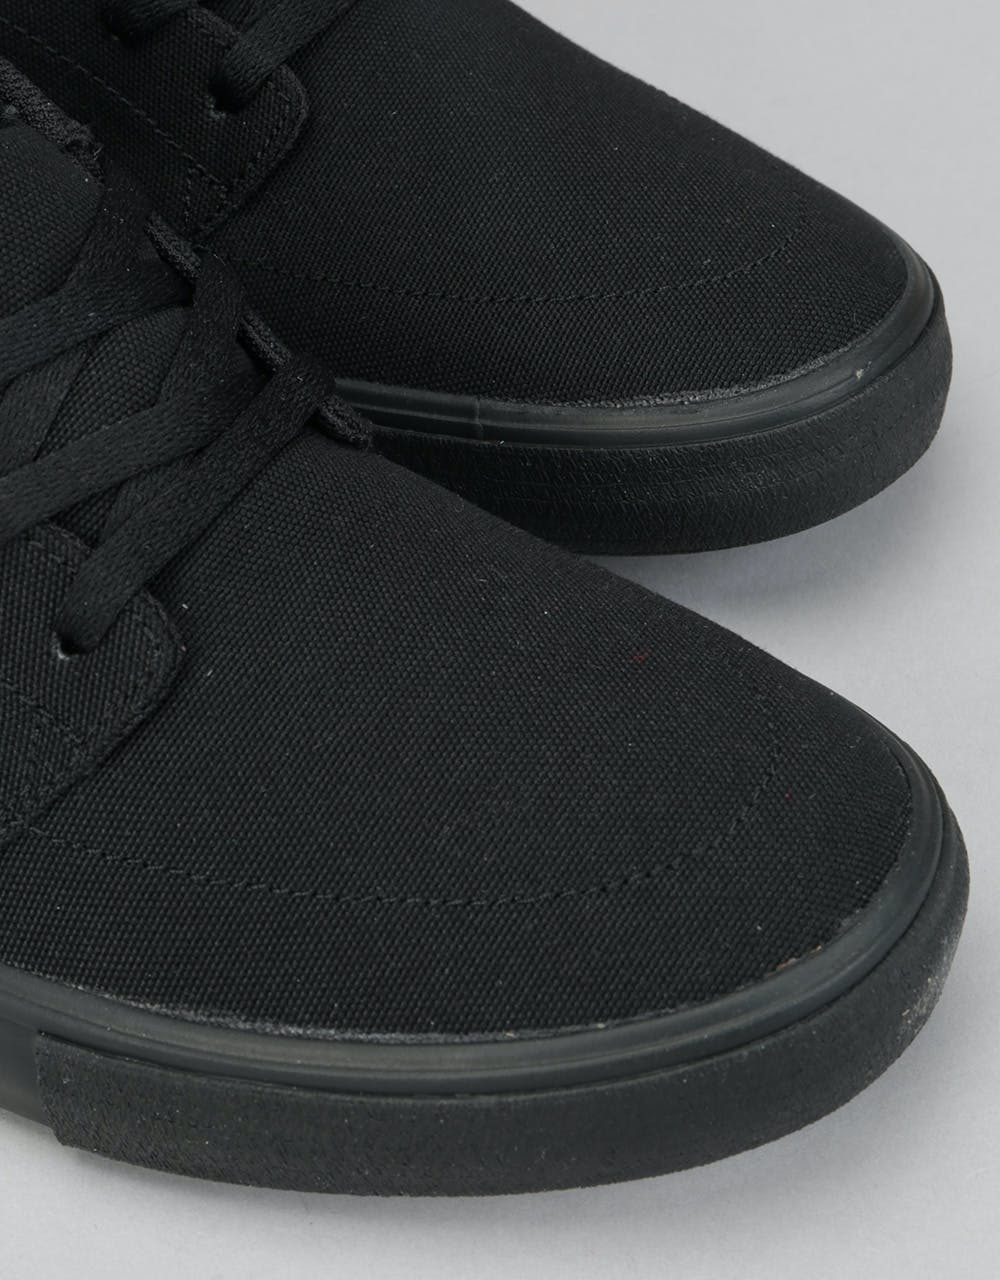 Nike SB Solarsoft Portmore II Skate Shoes - Black/Black